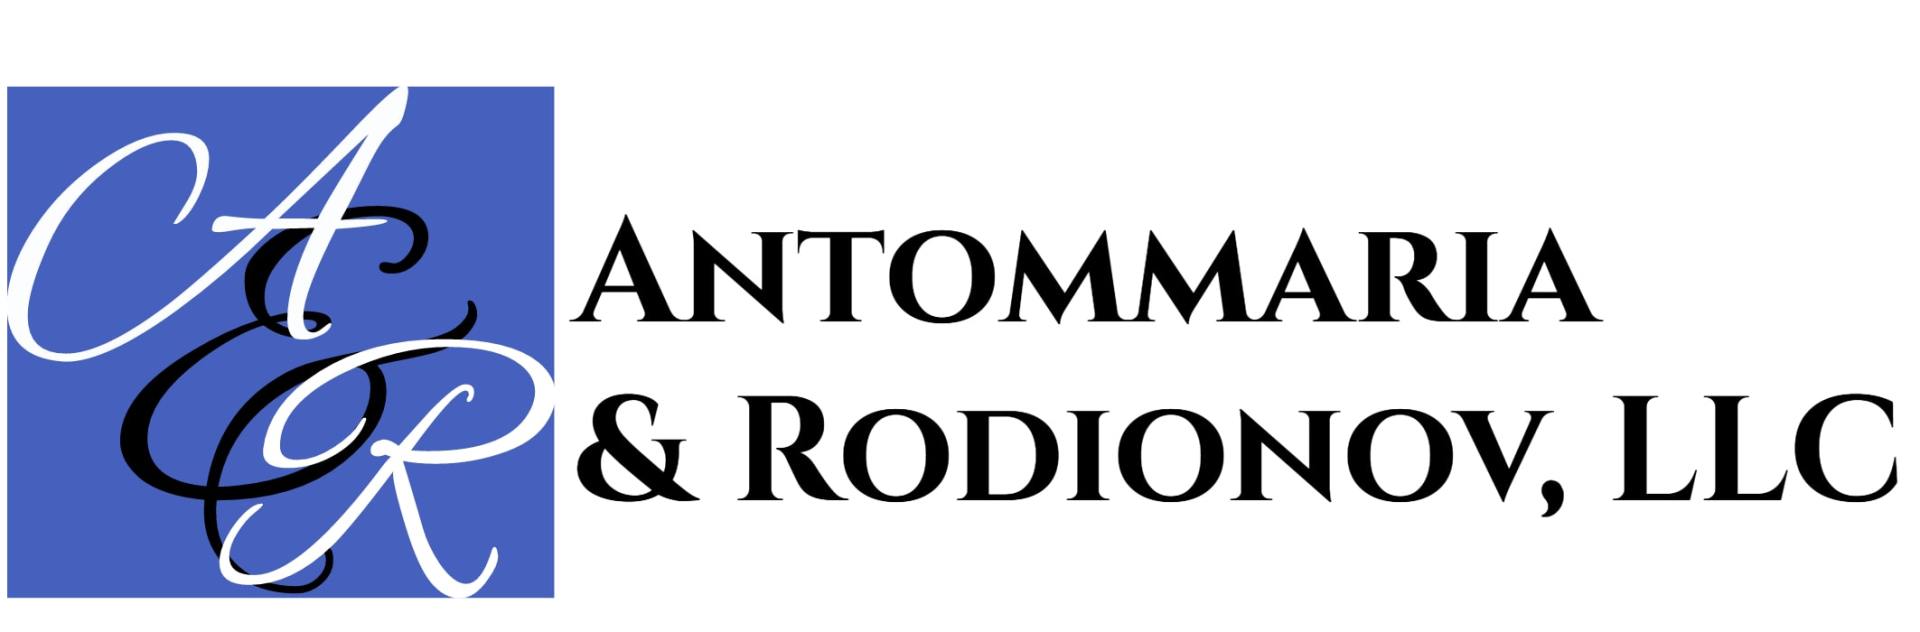 Antommaria & Rodionov, LLC